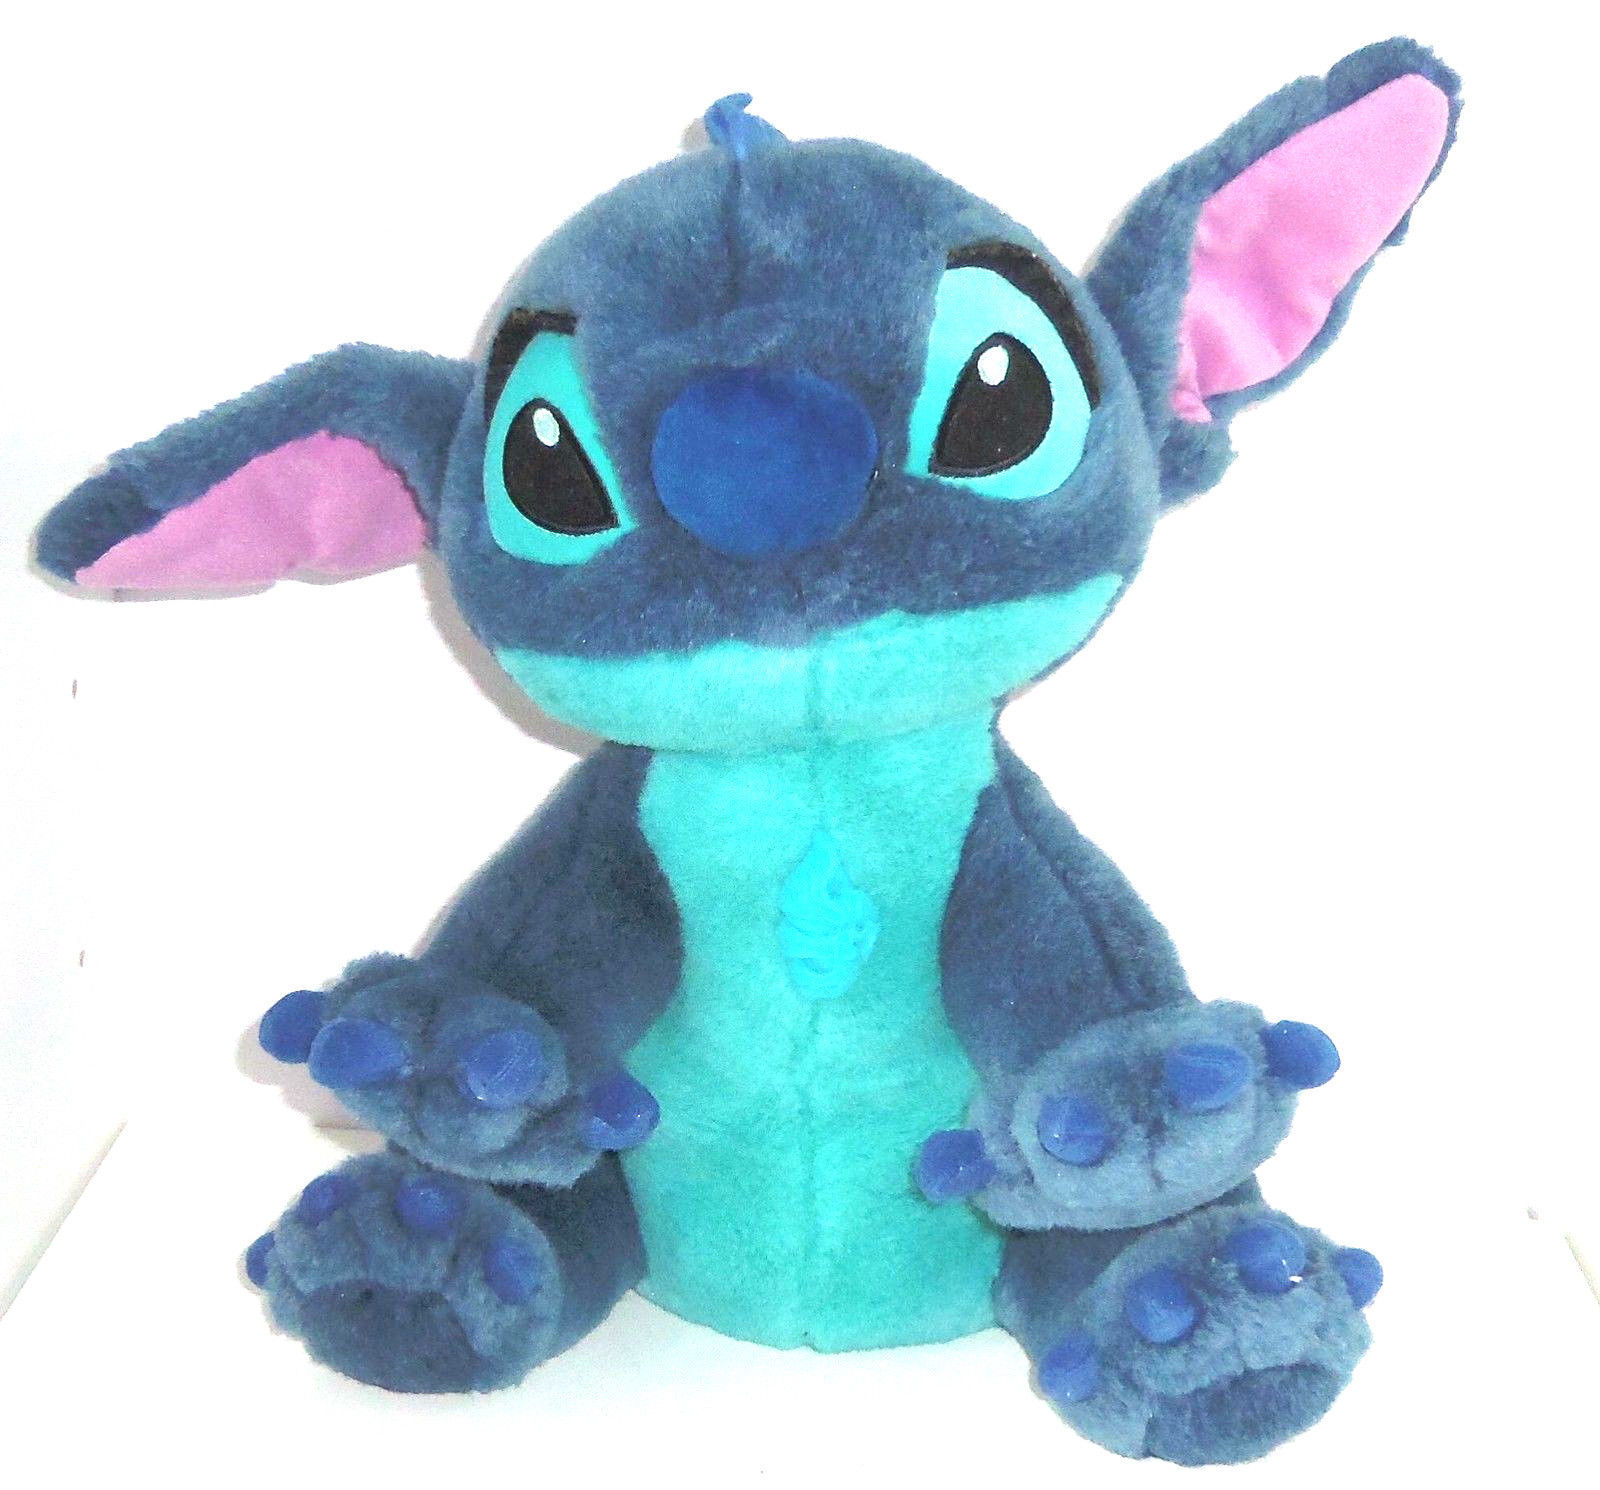 Disney Stitch Plush Stuffed Animal - Limited Edition - Winter Sweater & Antlers - 10.5 inch, Kids Unisex, Blue